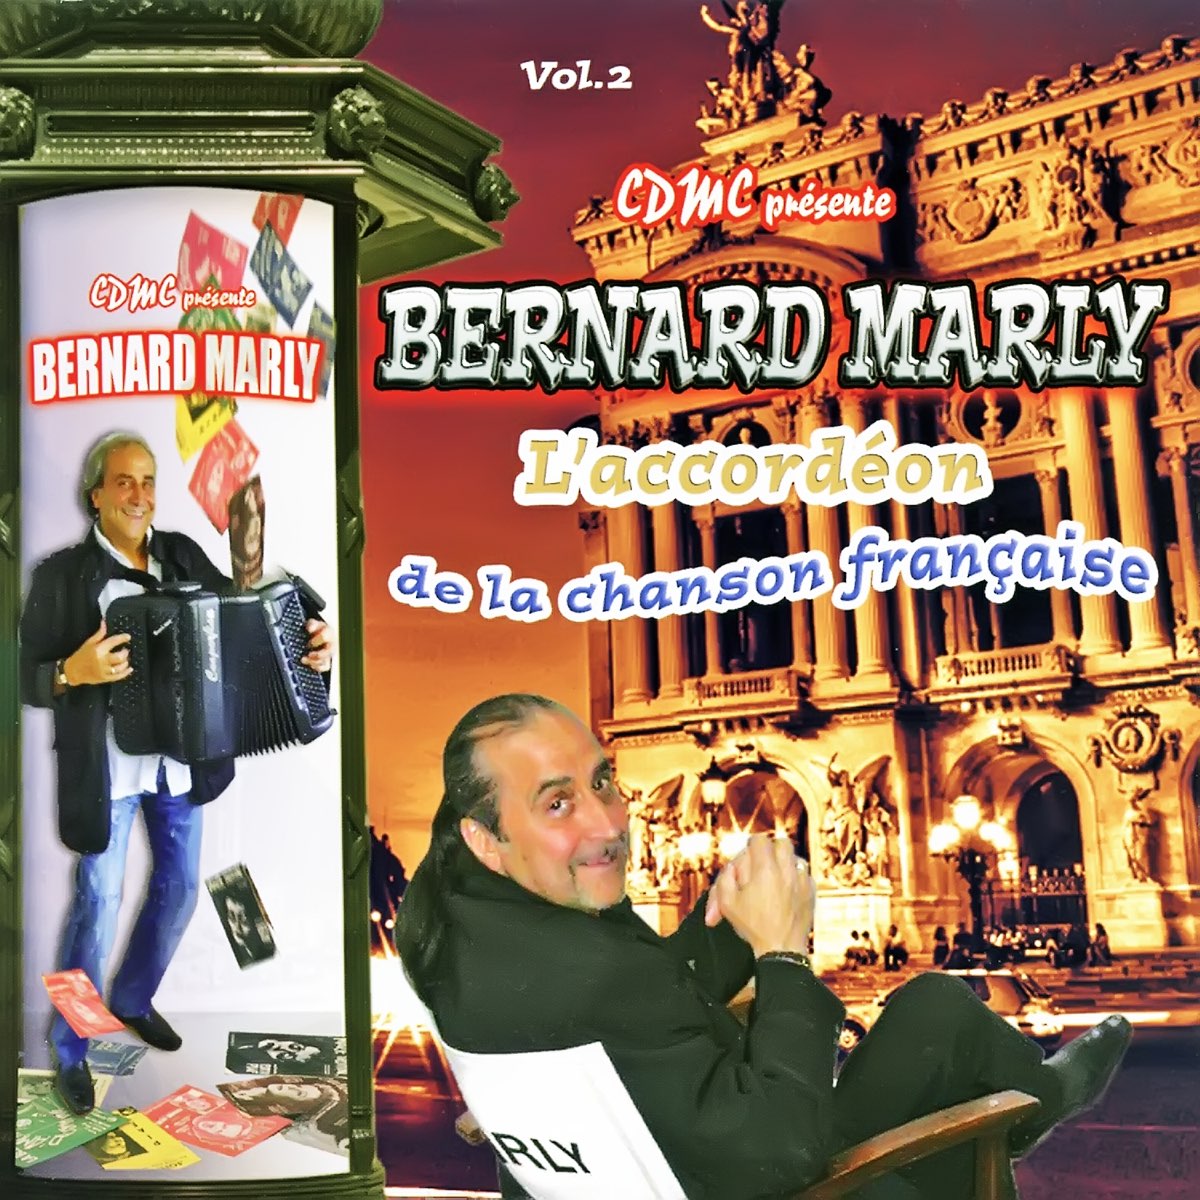 L'accordéon de la chanson française, vol. 2 by Bernard Marly on Apple Music